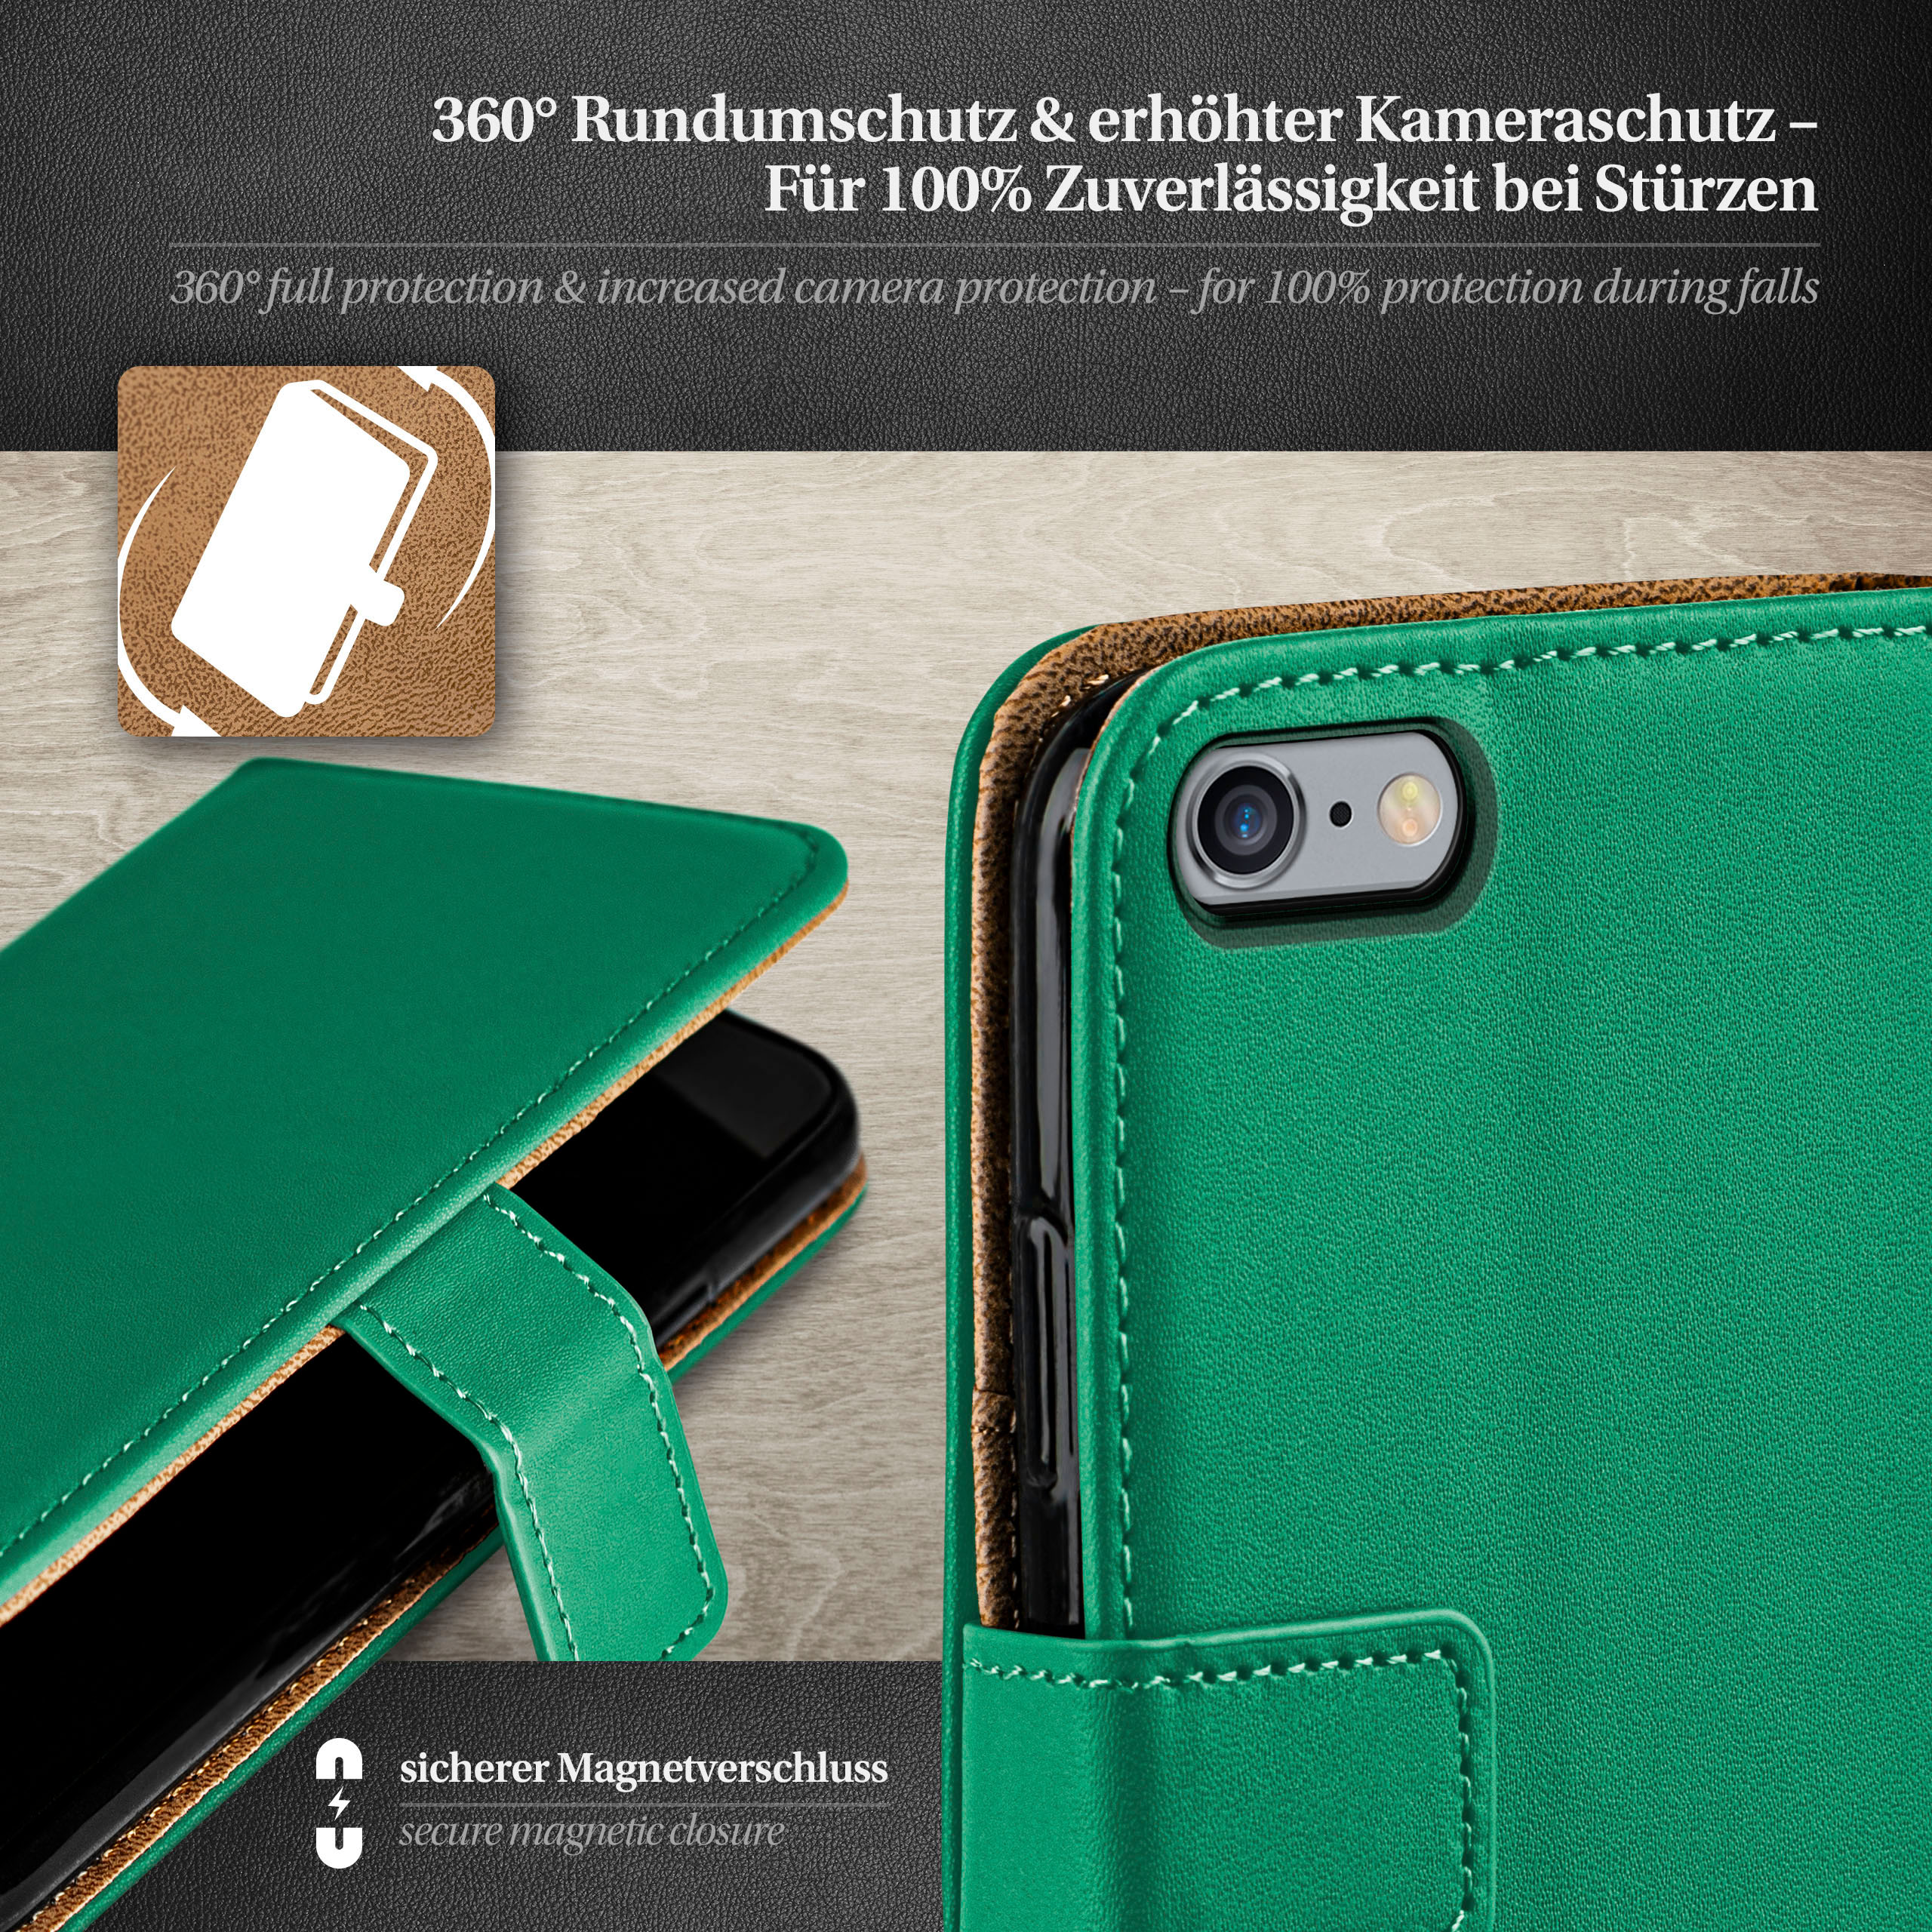 Case, MOEX Apple, Bookcover, Emerald-Green iPhone 6s / iPhone 6, Book